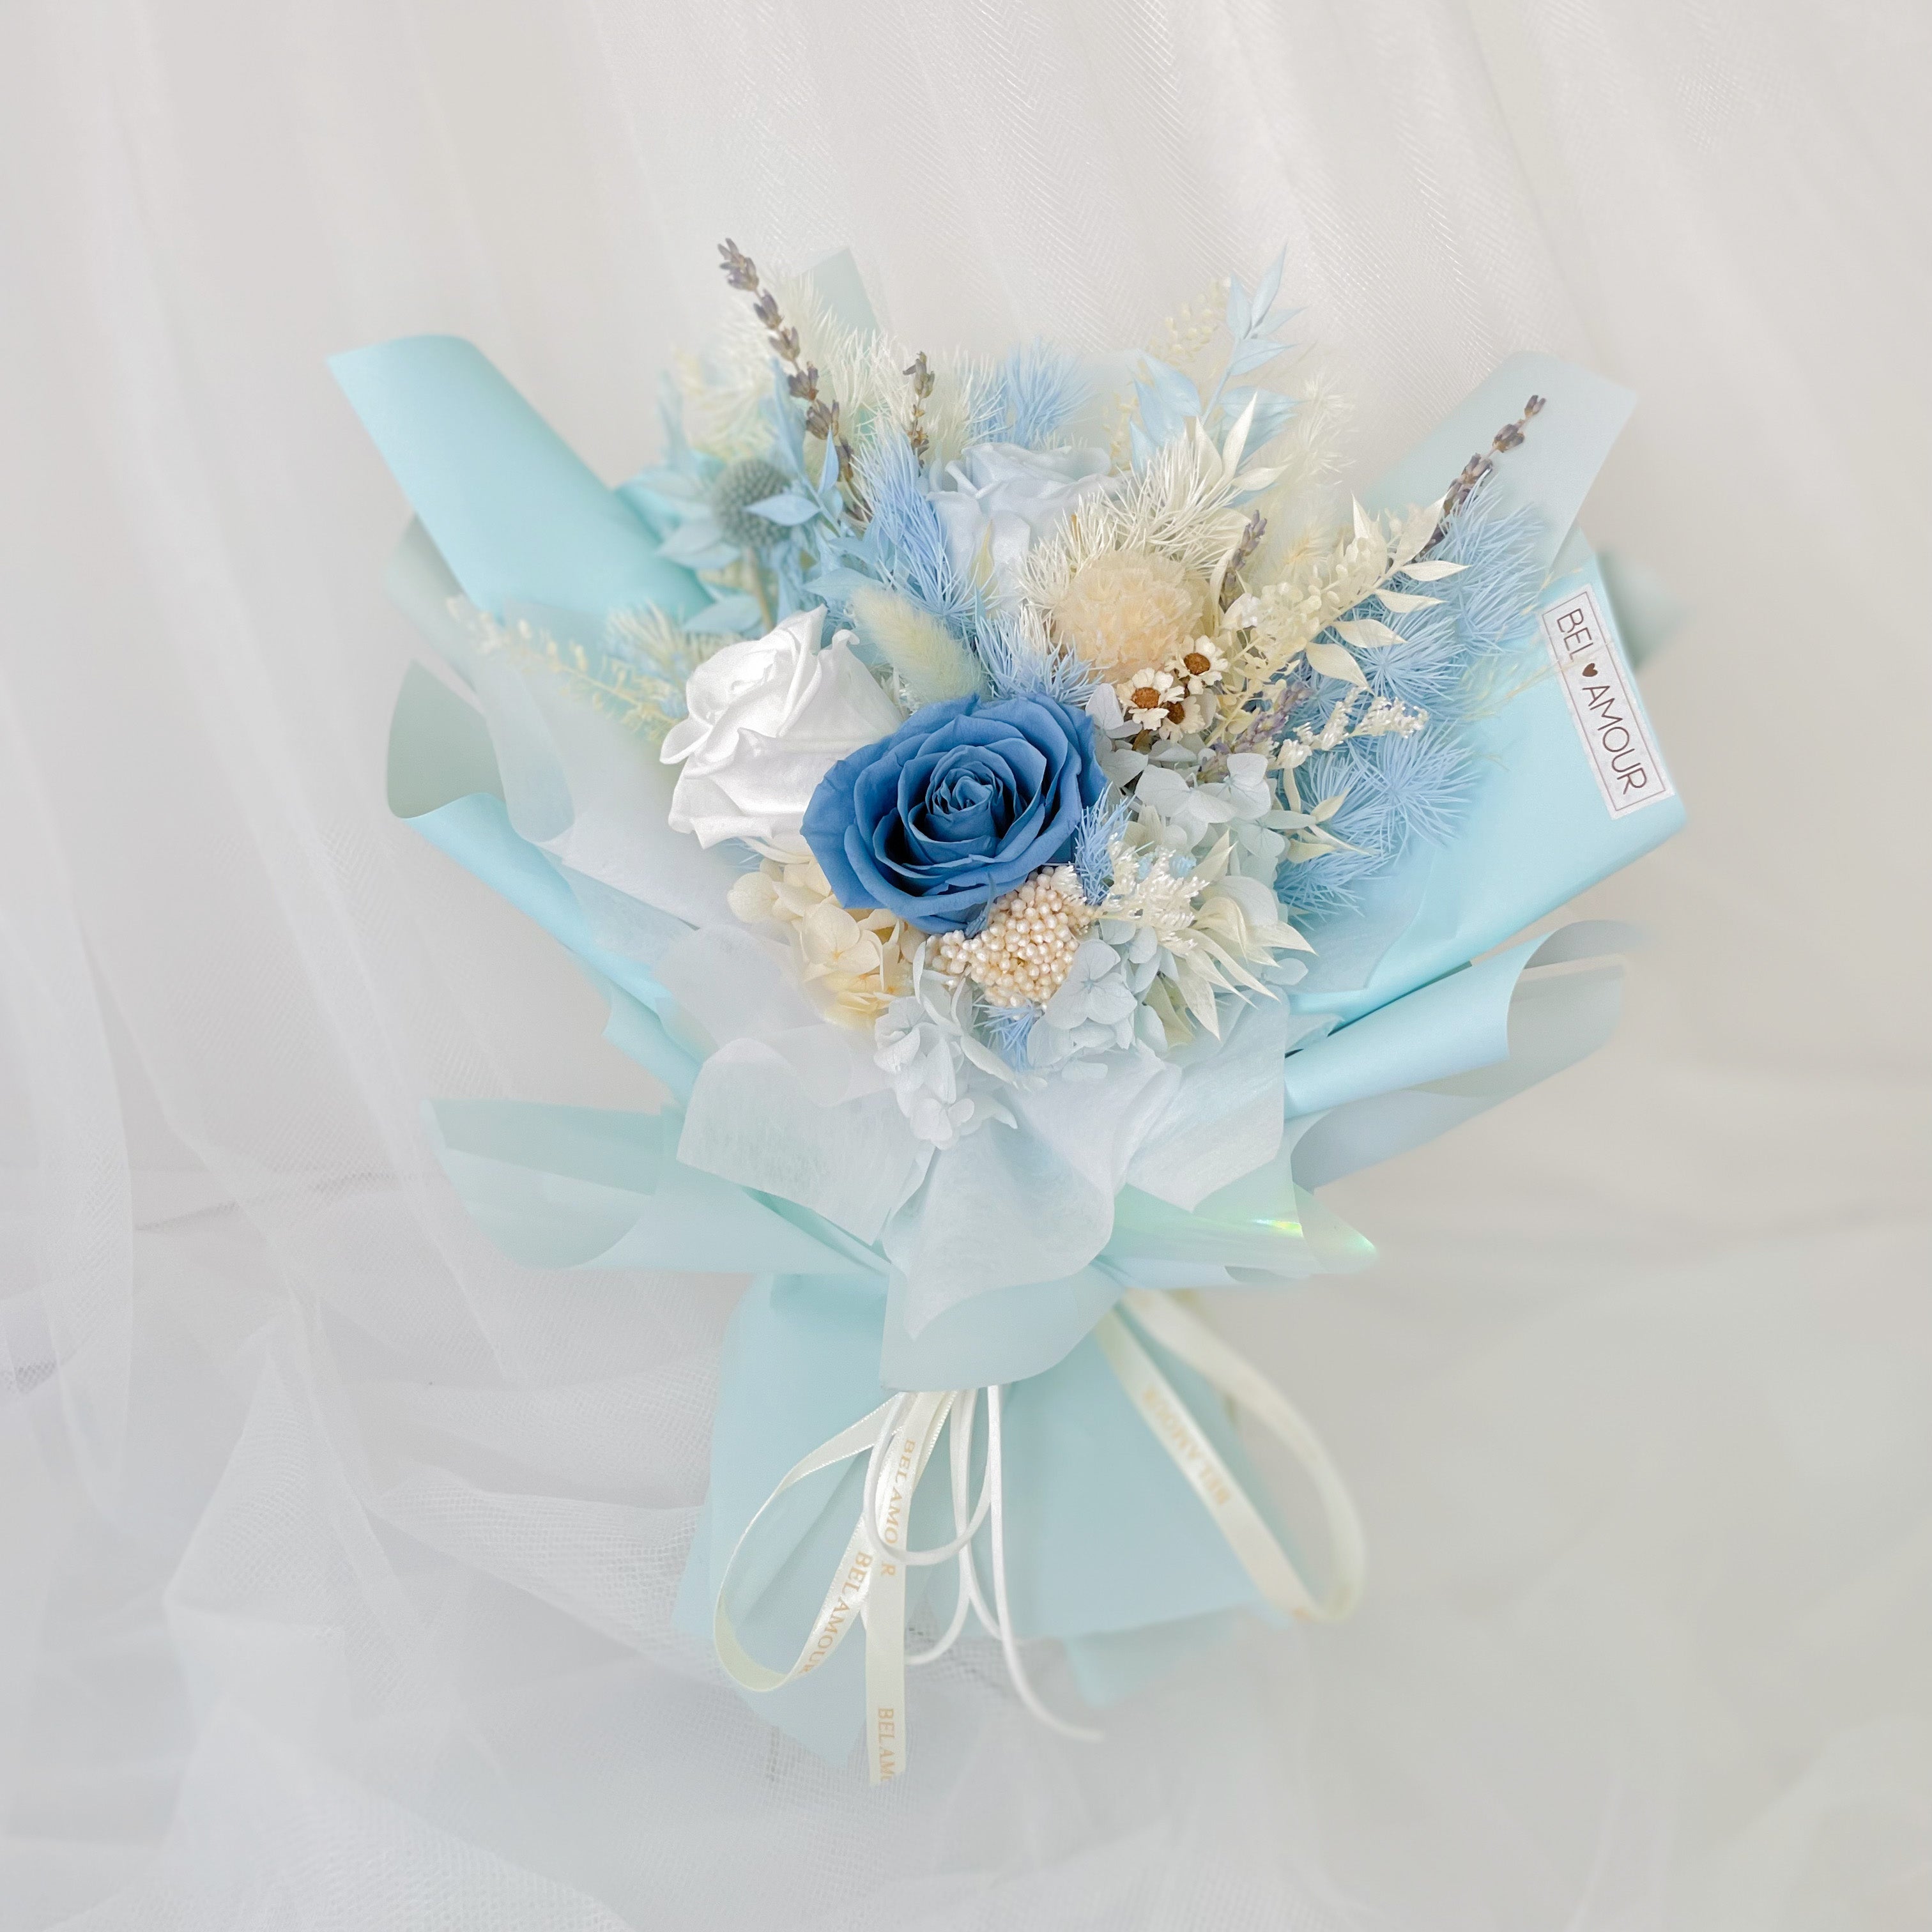 Preserved Flower Bouquet - 3 Stalks Roses (Dusty Blue, Sky Blue, White)